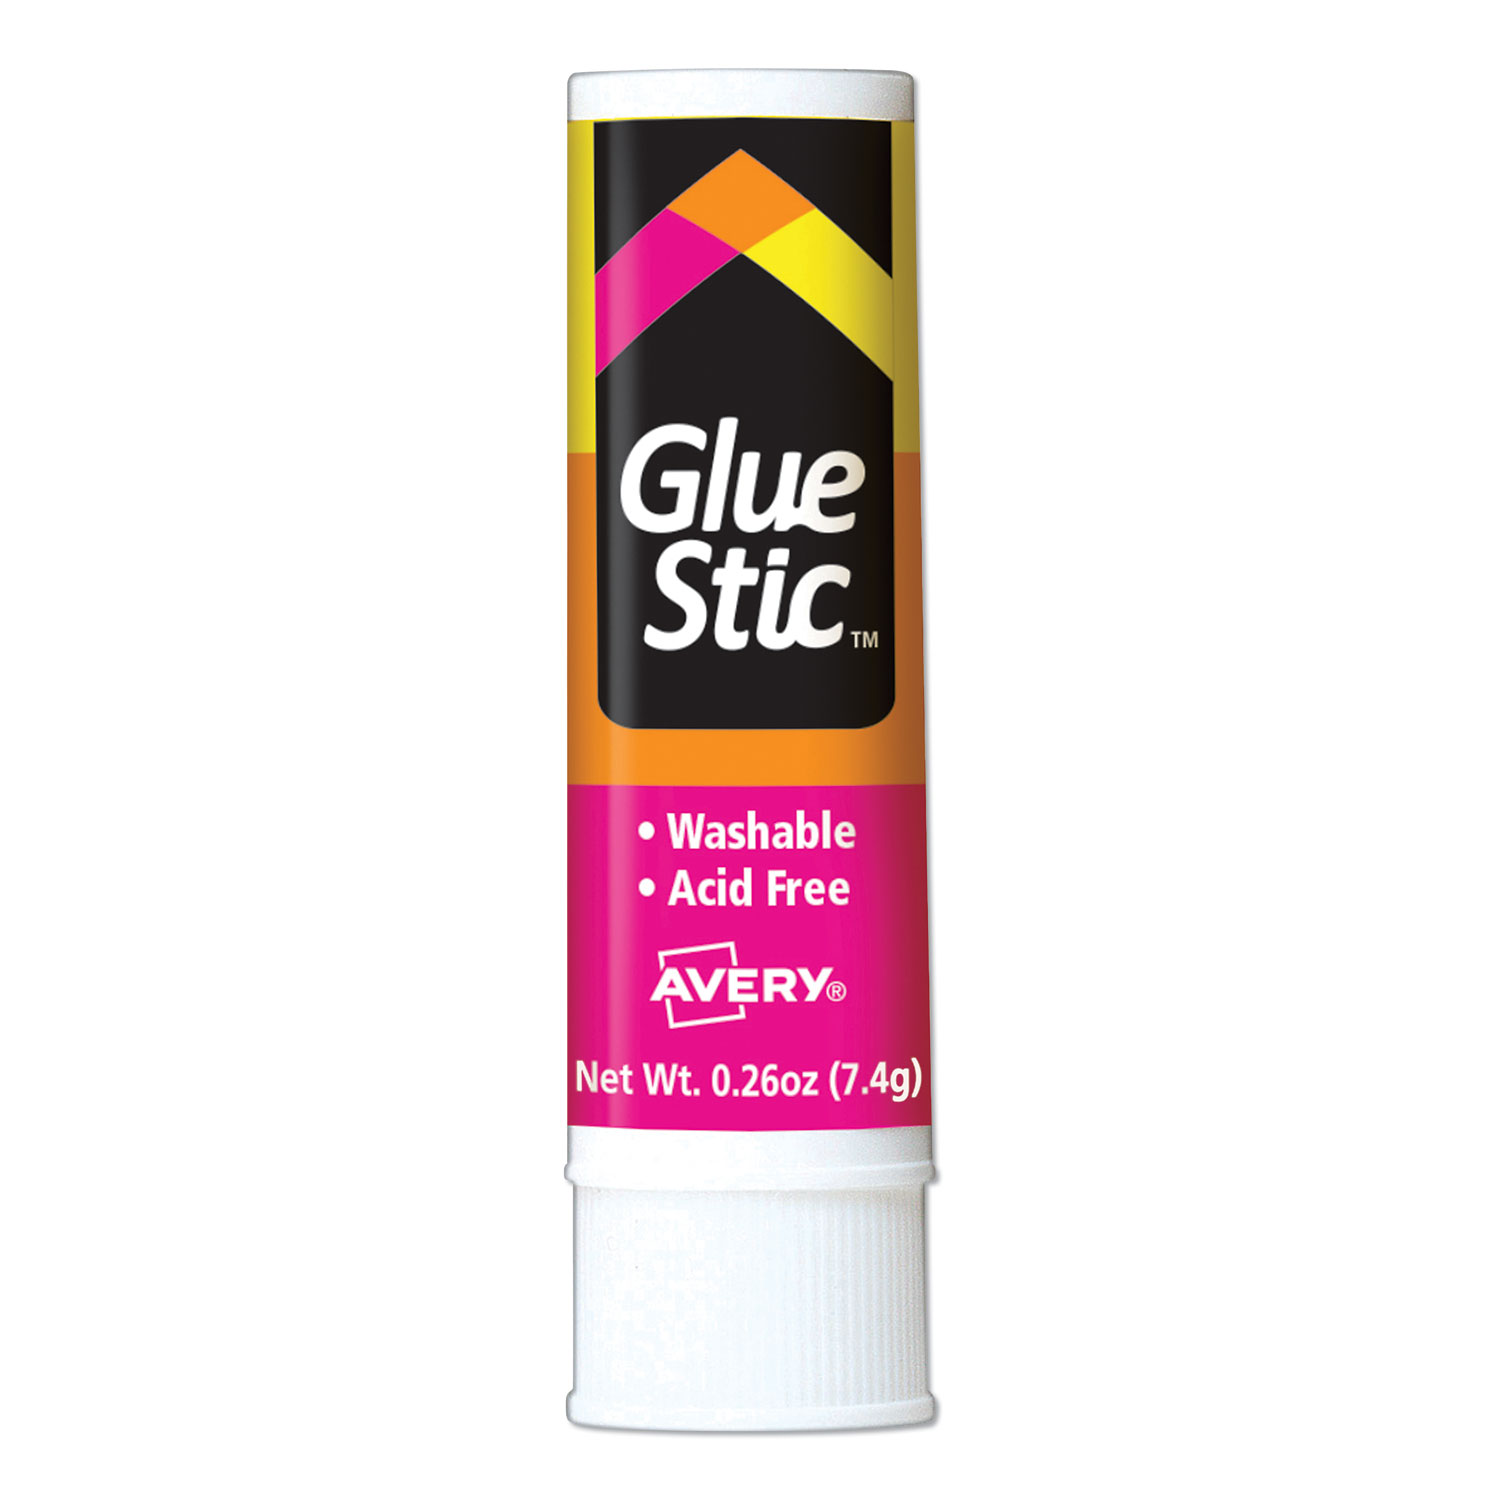  Avery Glue Stic, White, Washable, Non-Toxic, 1.27oz, 6 Glue  Sticks, 2-Pack, 12 Total